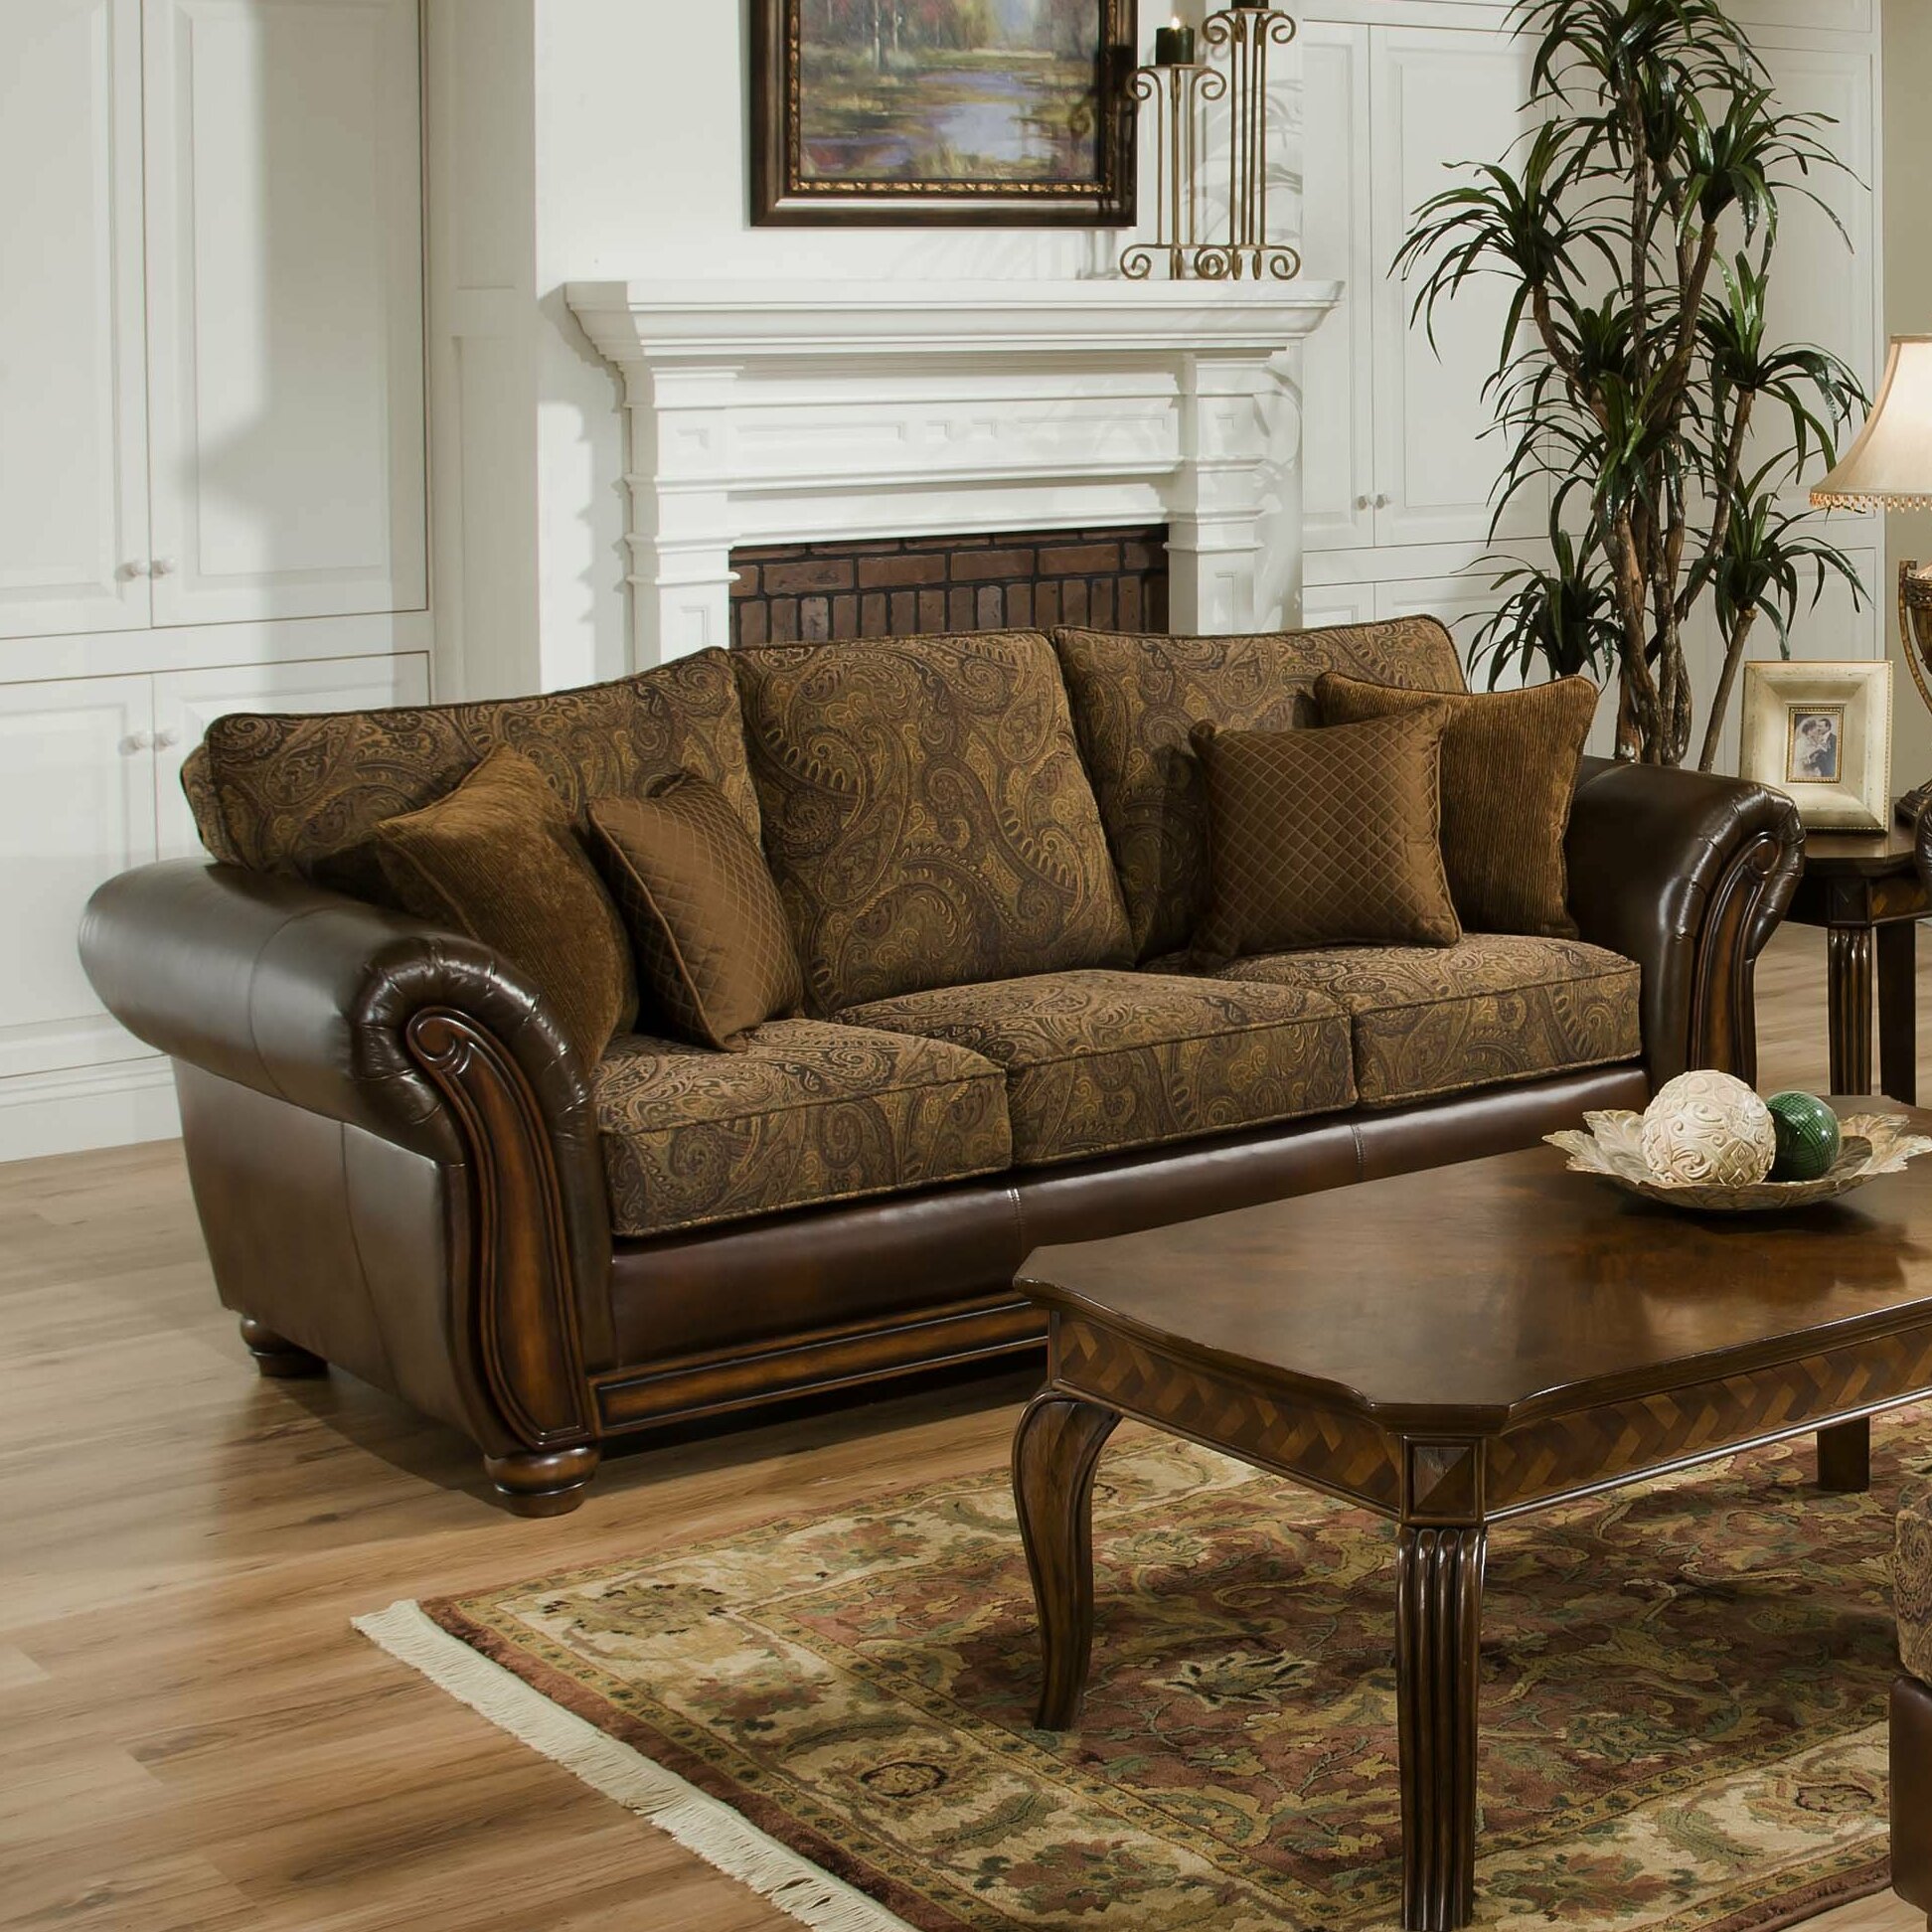 Astoria Grand Simmons Upholstery Aske Queen Sleeper Sofa